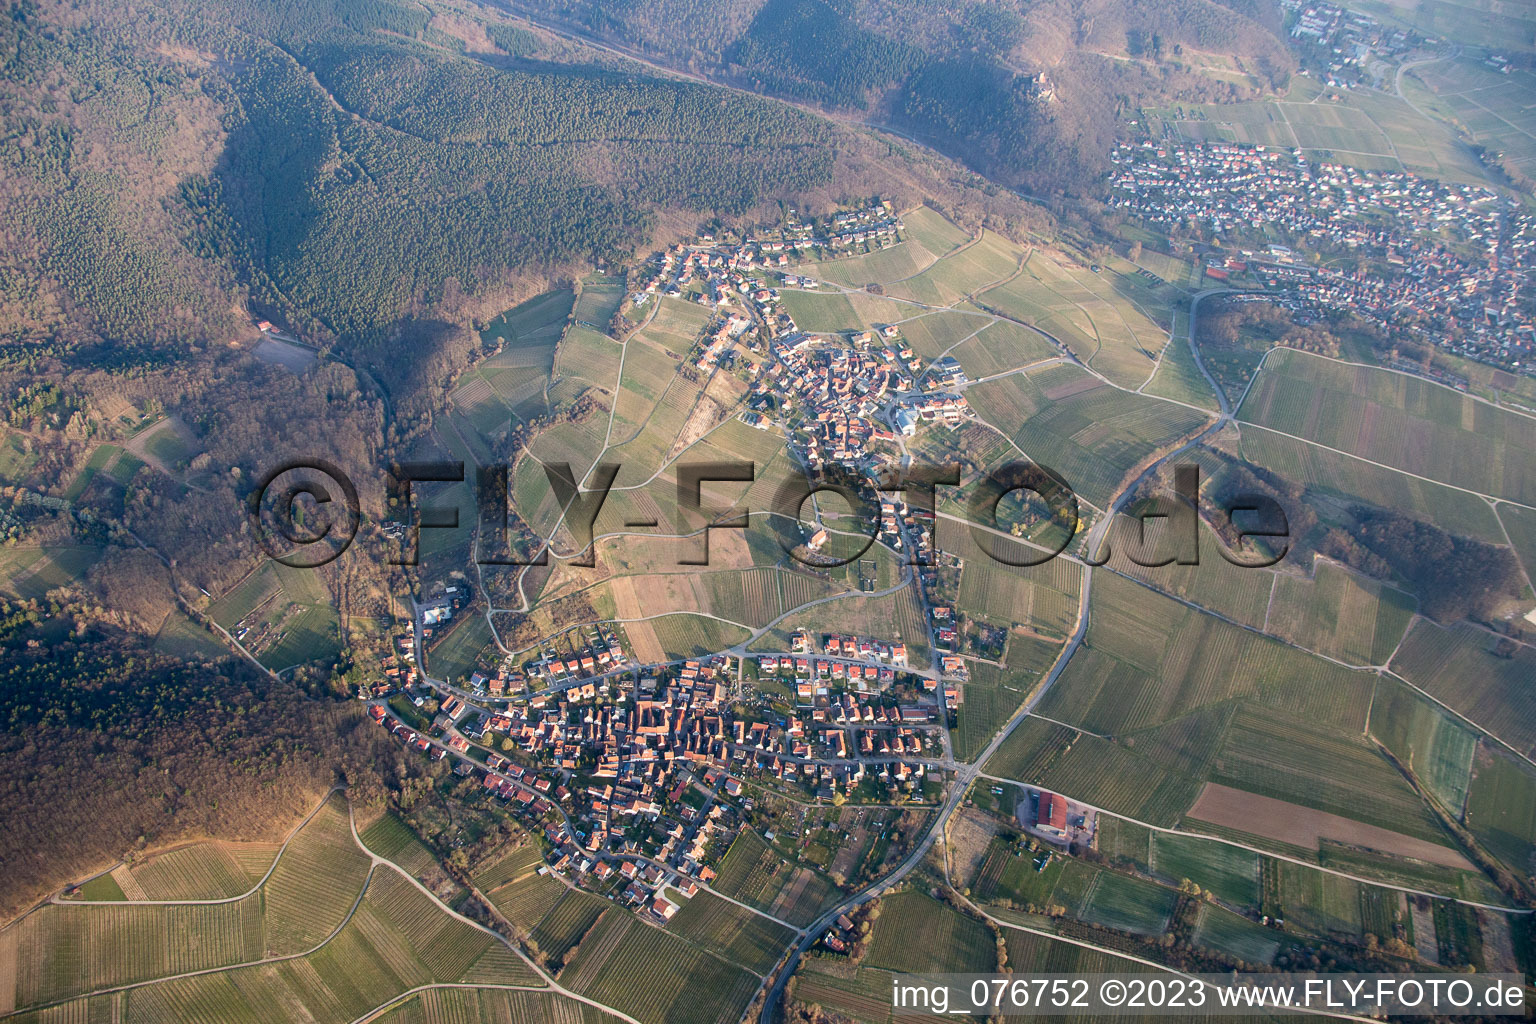 Aerial view of District Gleiszellen in Gleiszellen-Gleishorbach in the state Rhineland-Palatinate, Germany